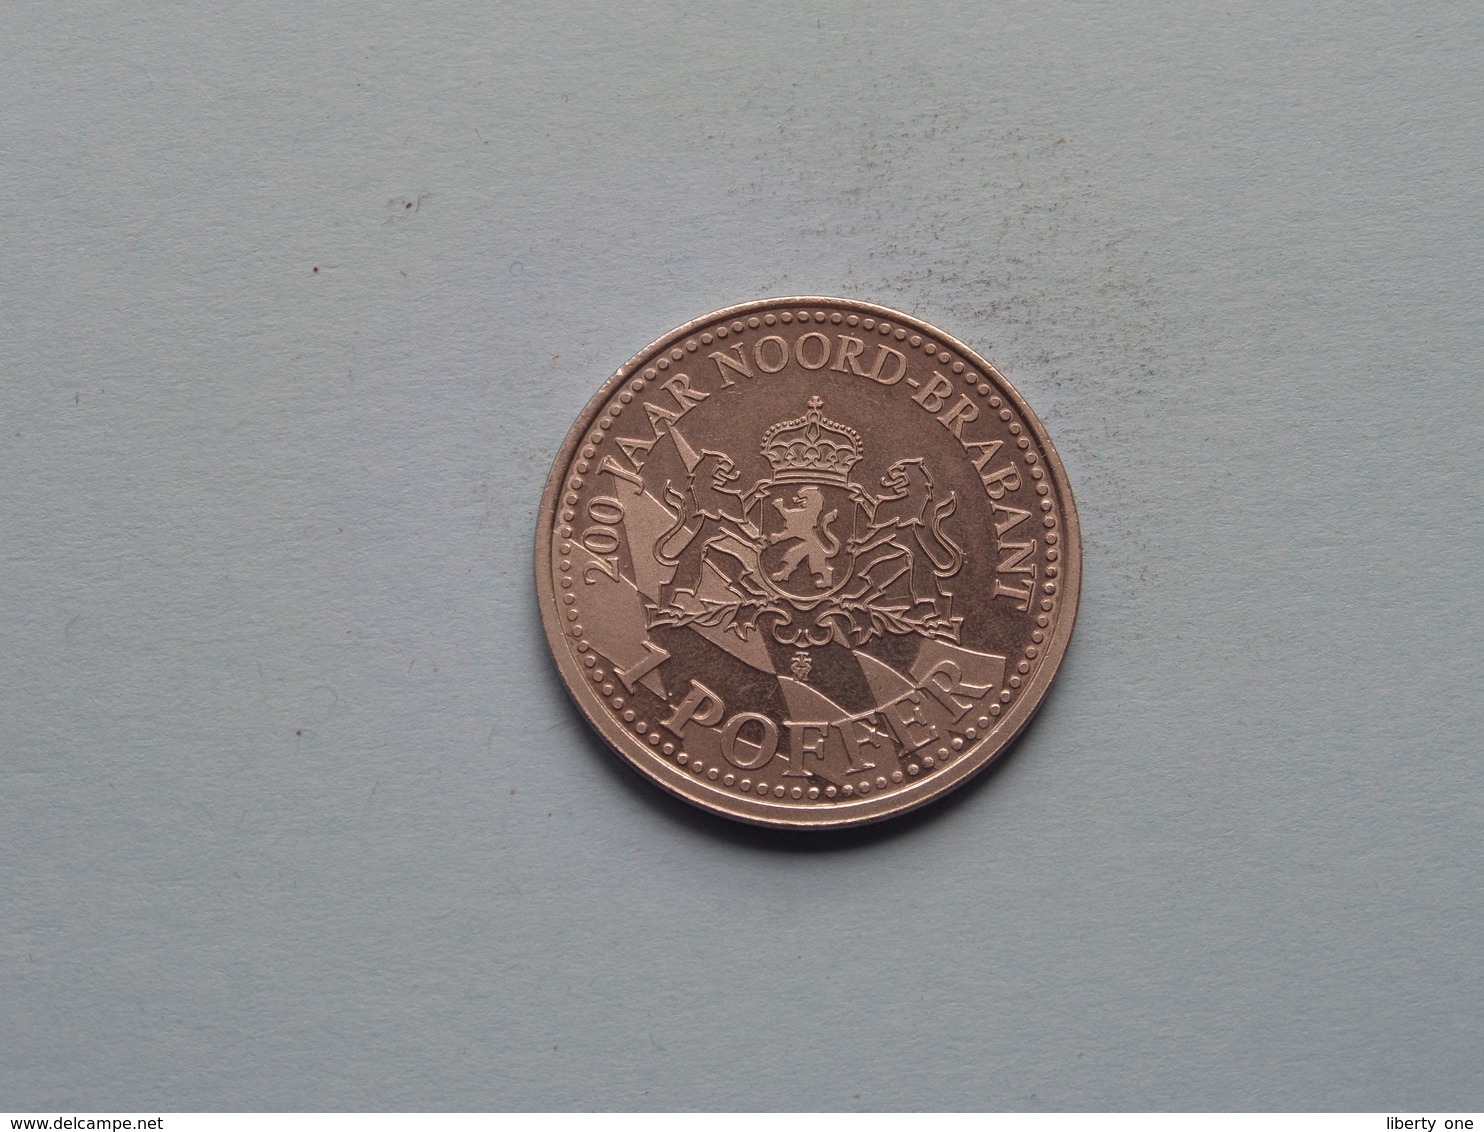 1 POFFER > 200 Jaar NOORD BRABANT ( 30 Mm. - 9.3 Gr. ) > ( Uncleaned Coin / For Grade, Please See Photo ) ! - Monedas Elongadas (elongated Coins)